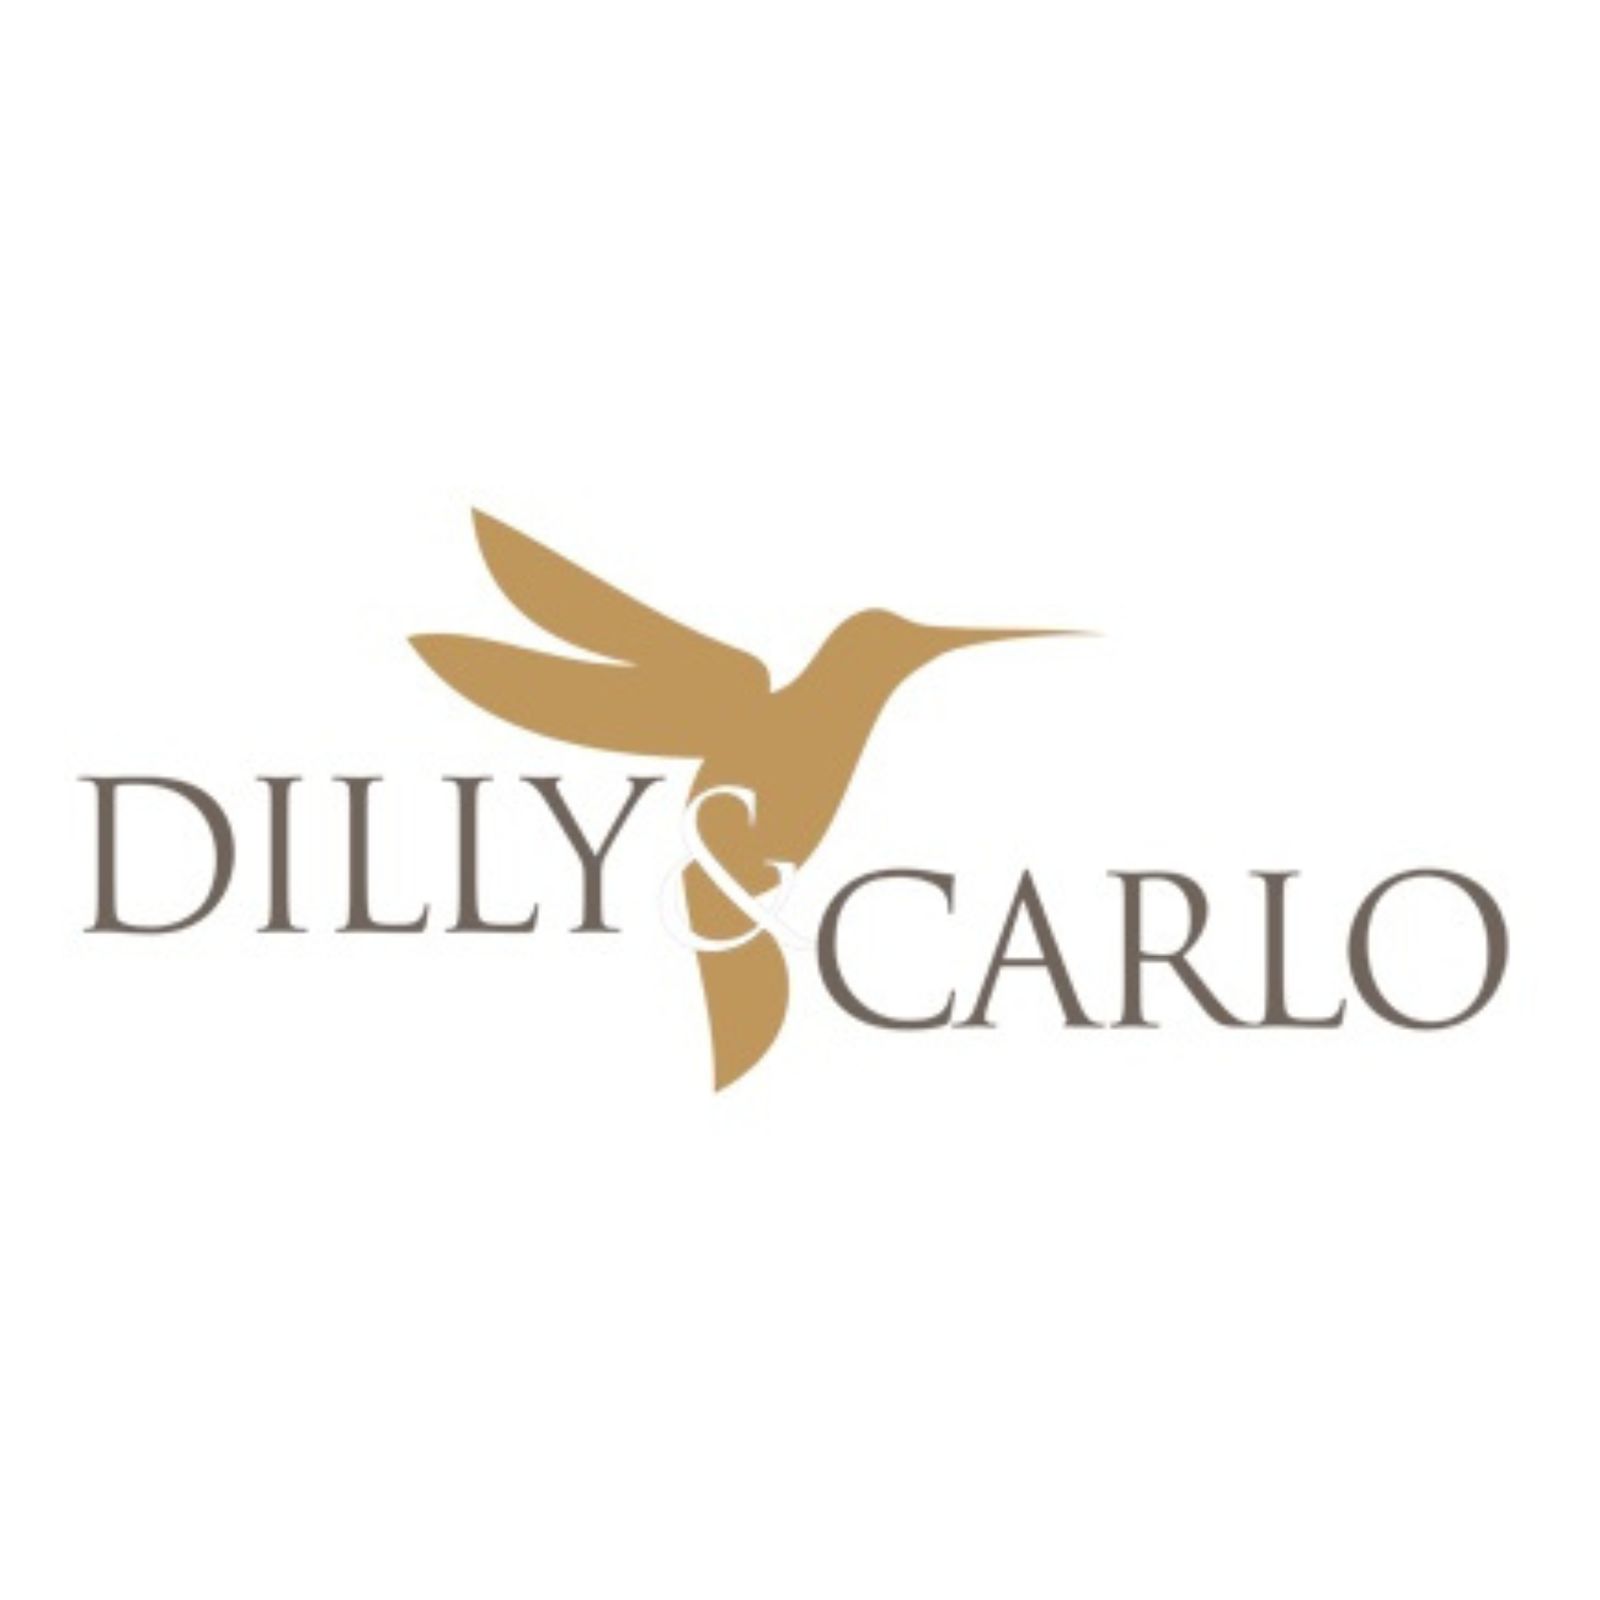 Dilly & Carlo logo